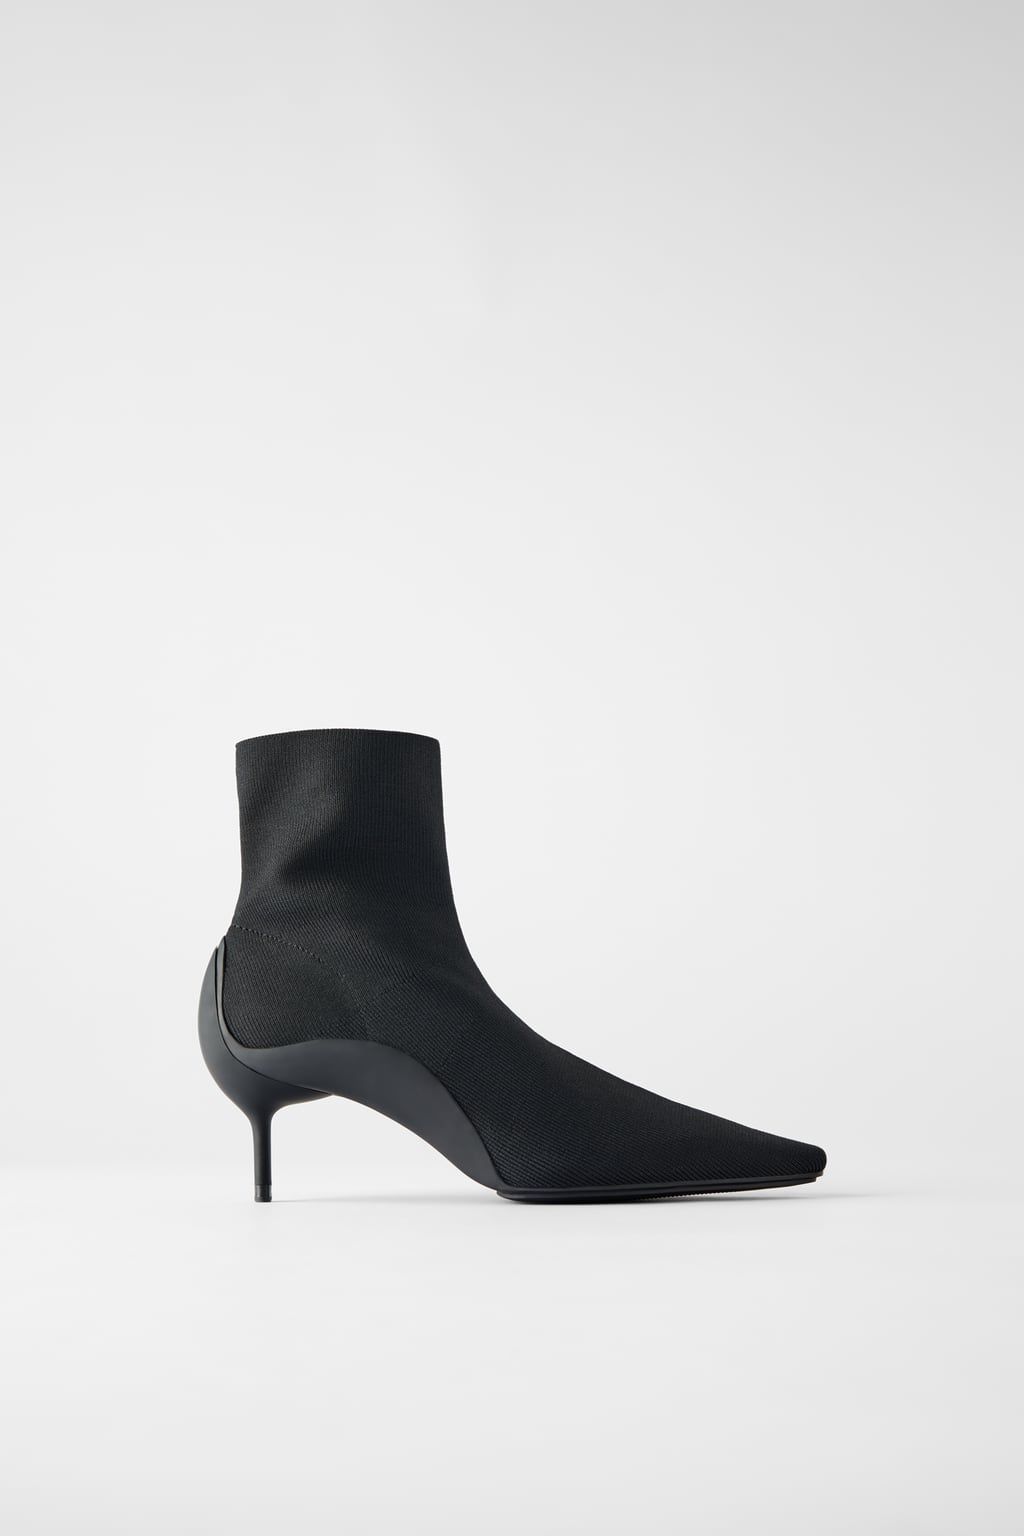 Zara boots: 9 best boots at Zara 